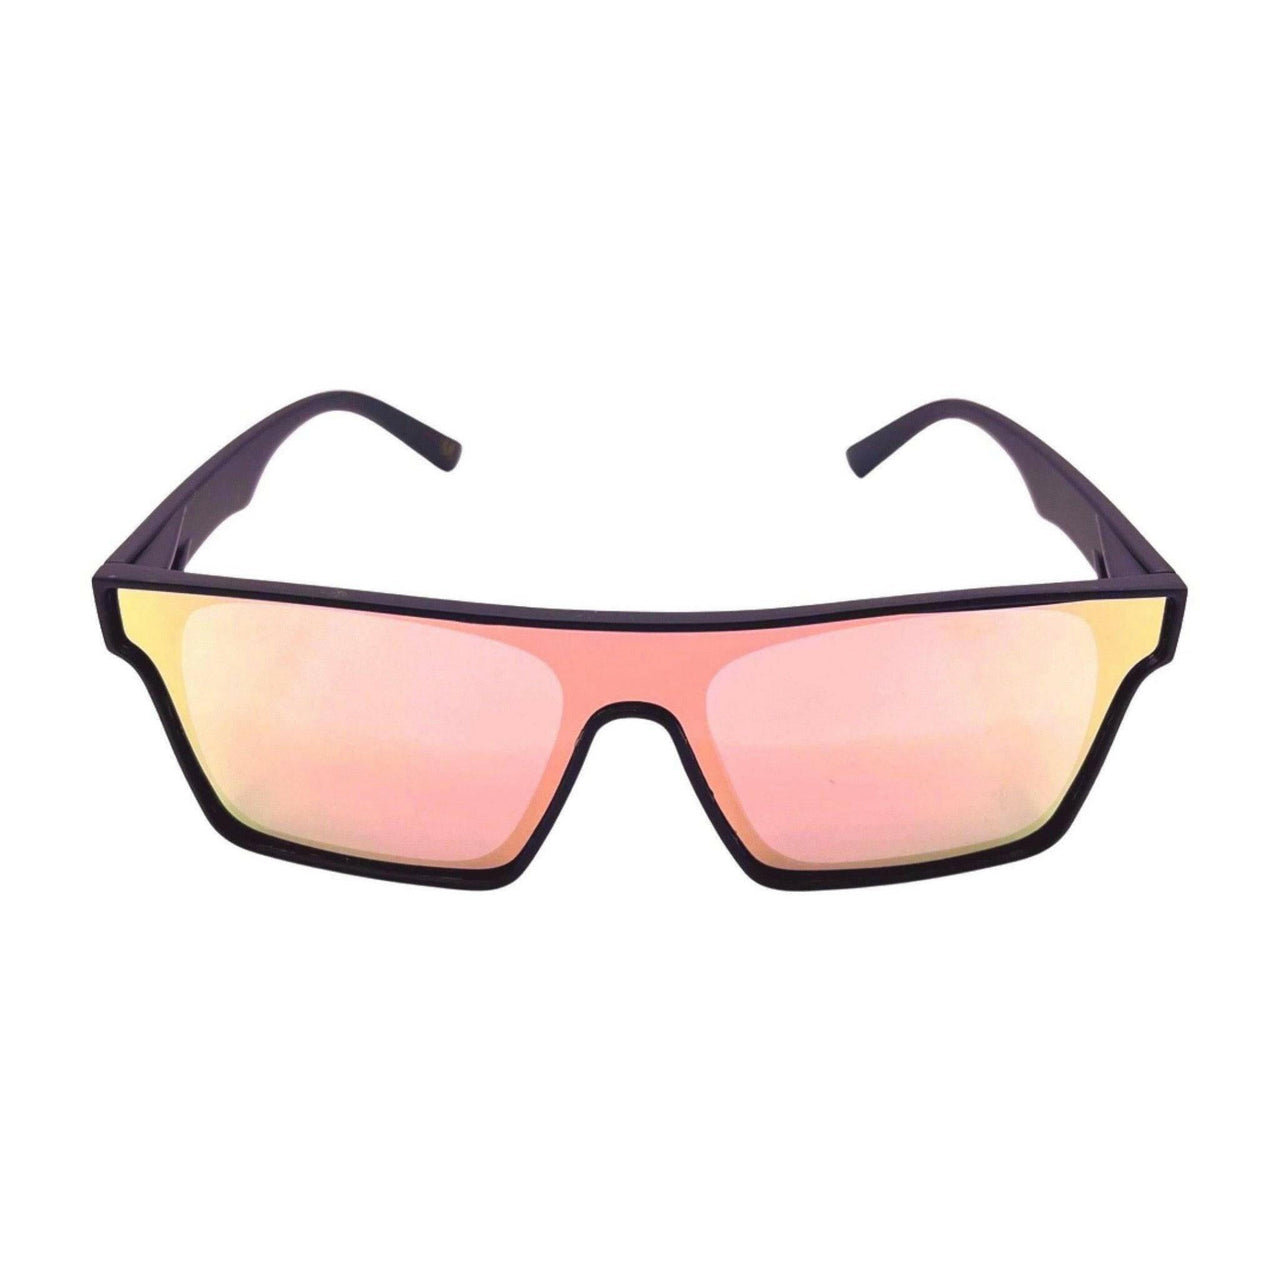 Rose Gold Party Shades Polarized Lens Sunglasses